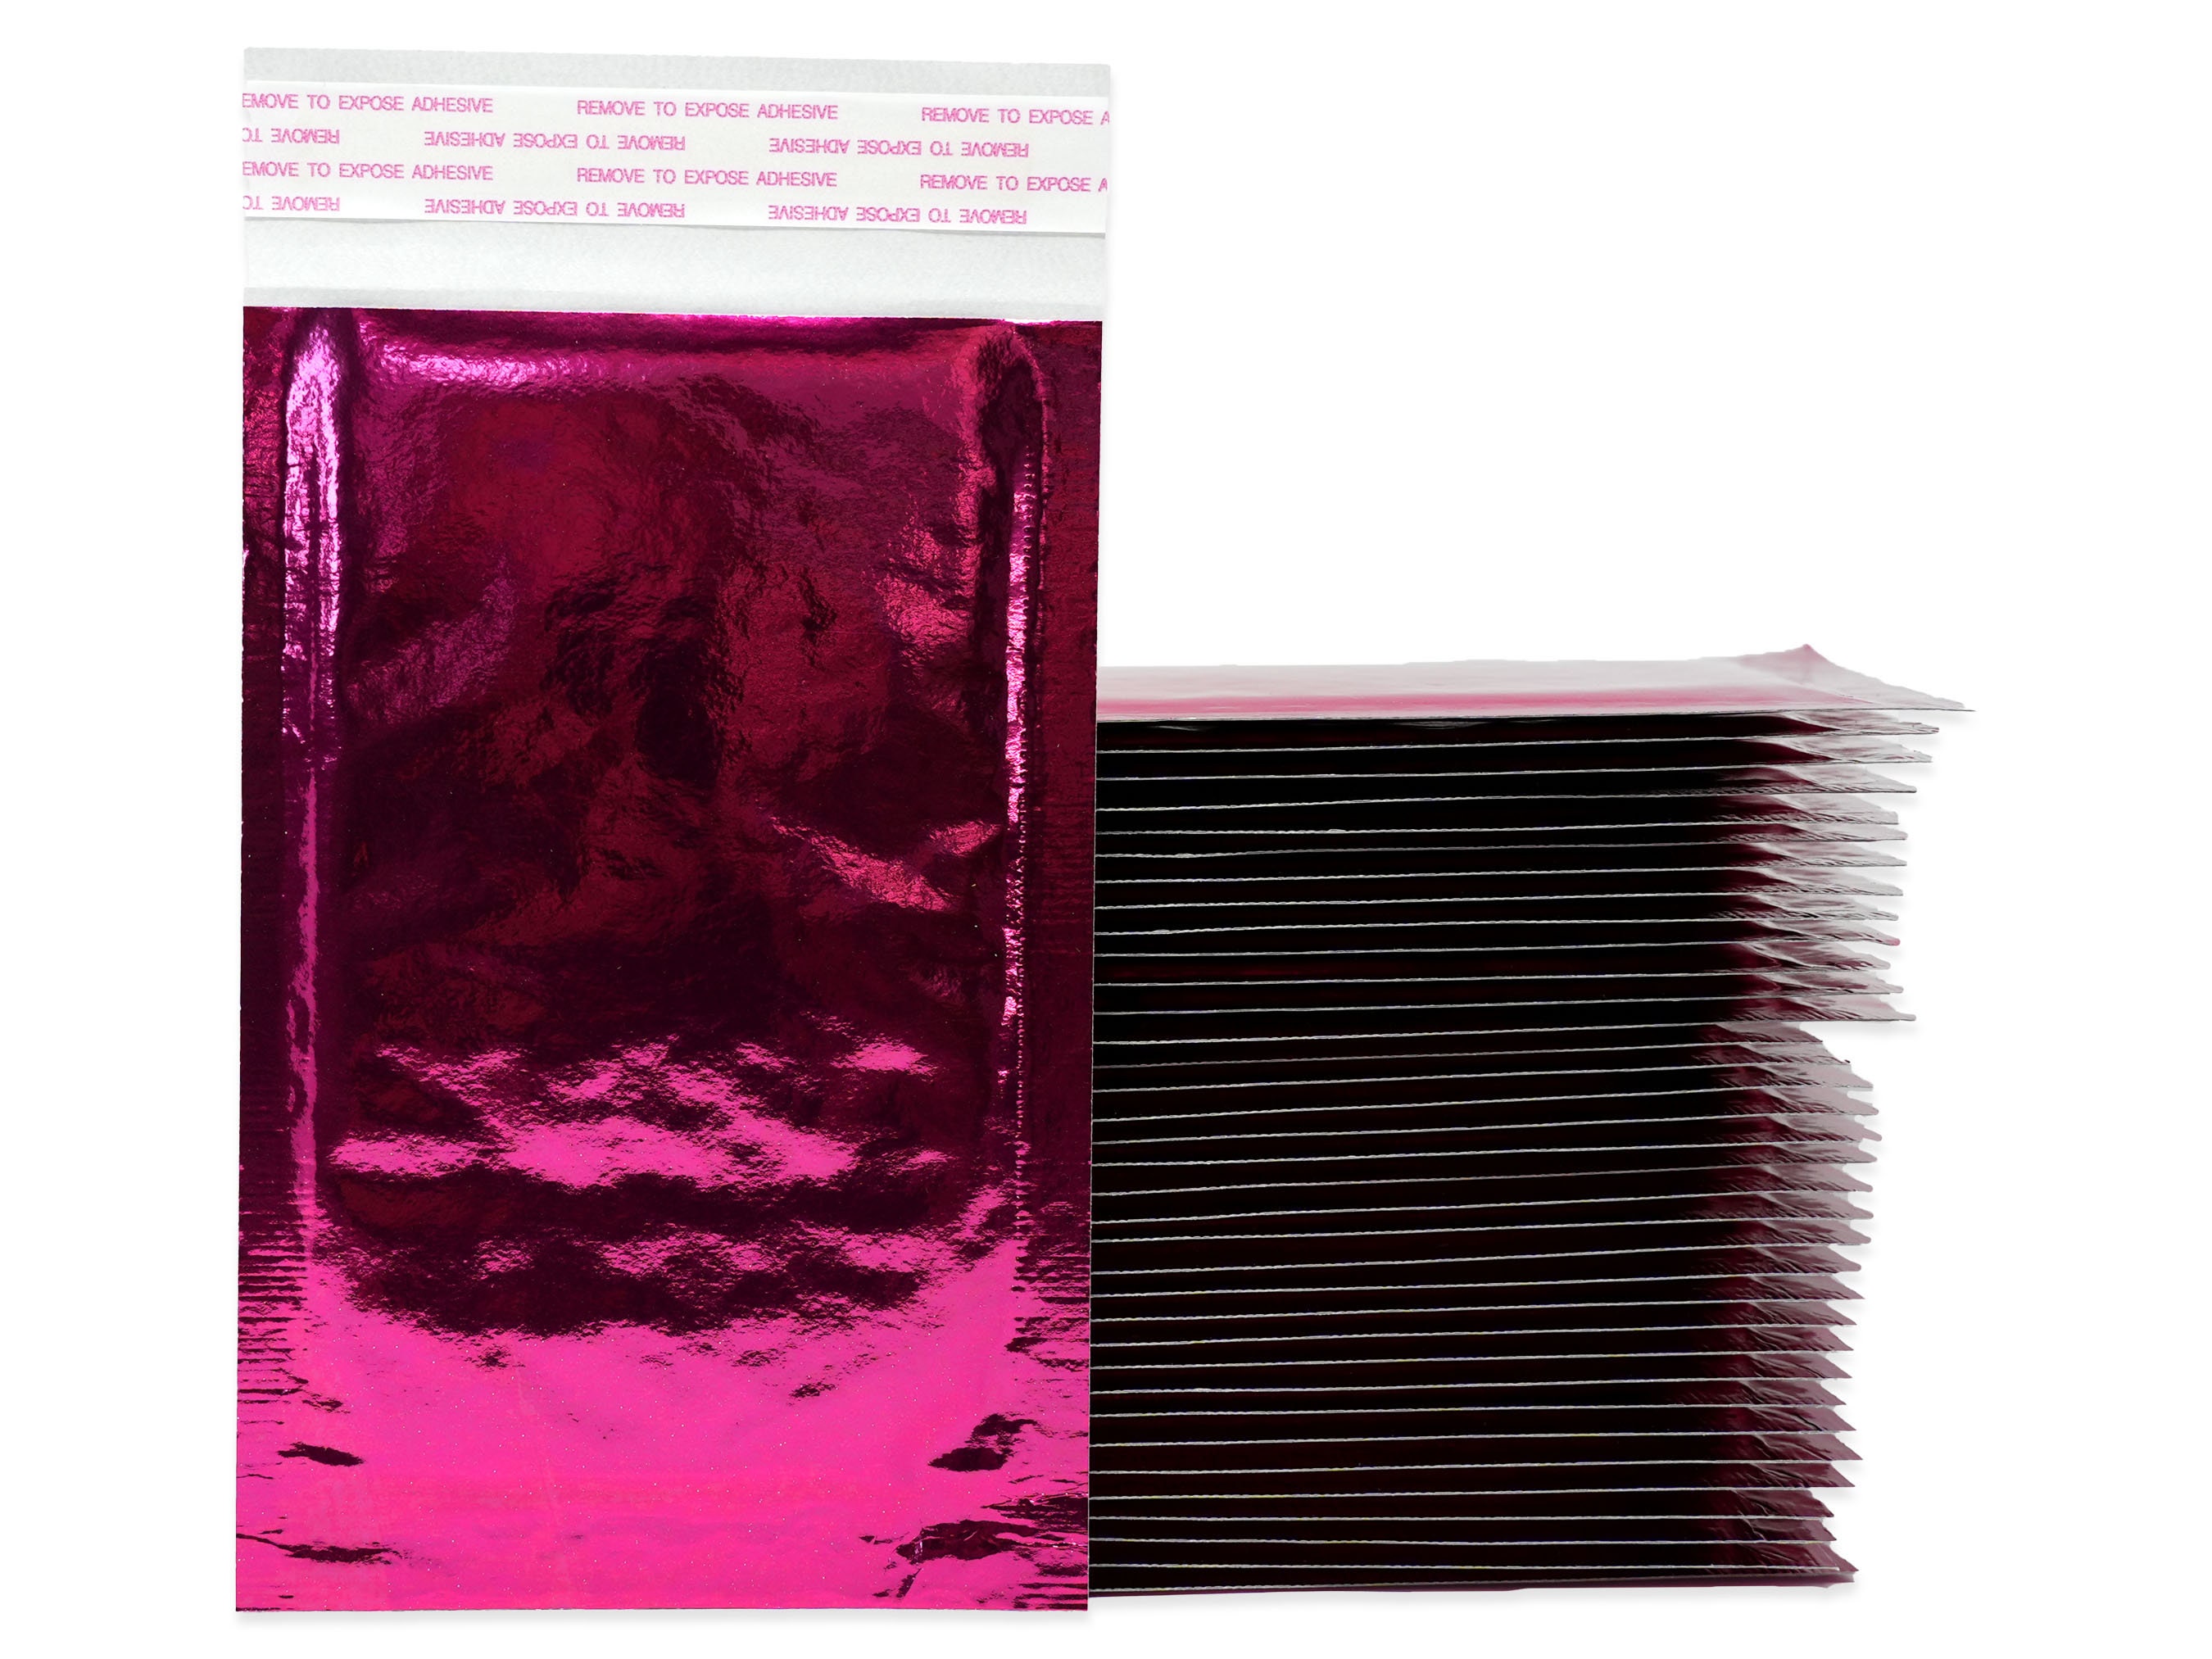 6.5 x 6.5  Hot Pink Metallic Gloss Foil bubble mailers Peel & Seal